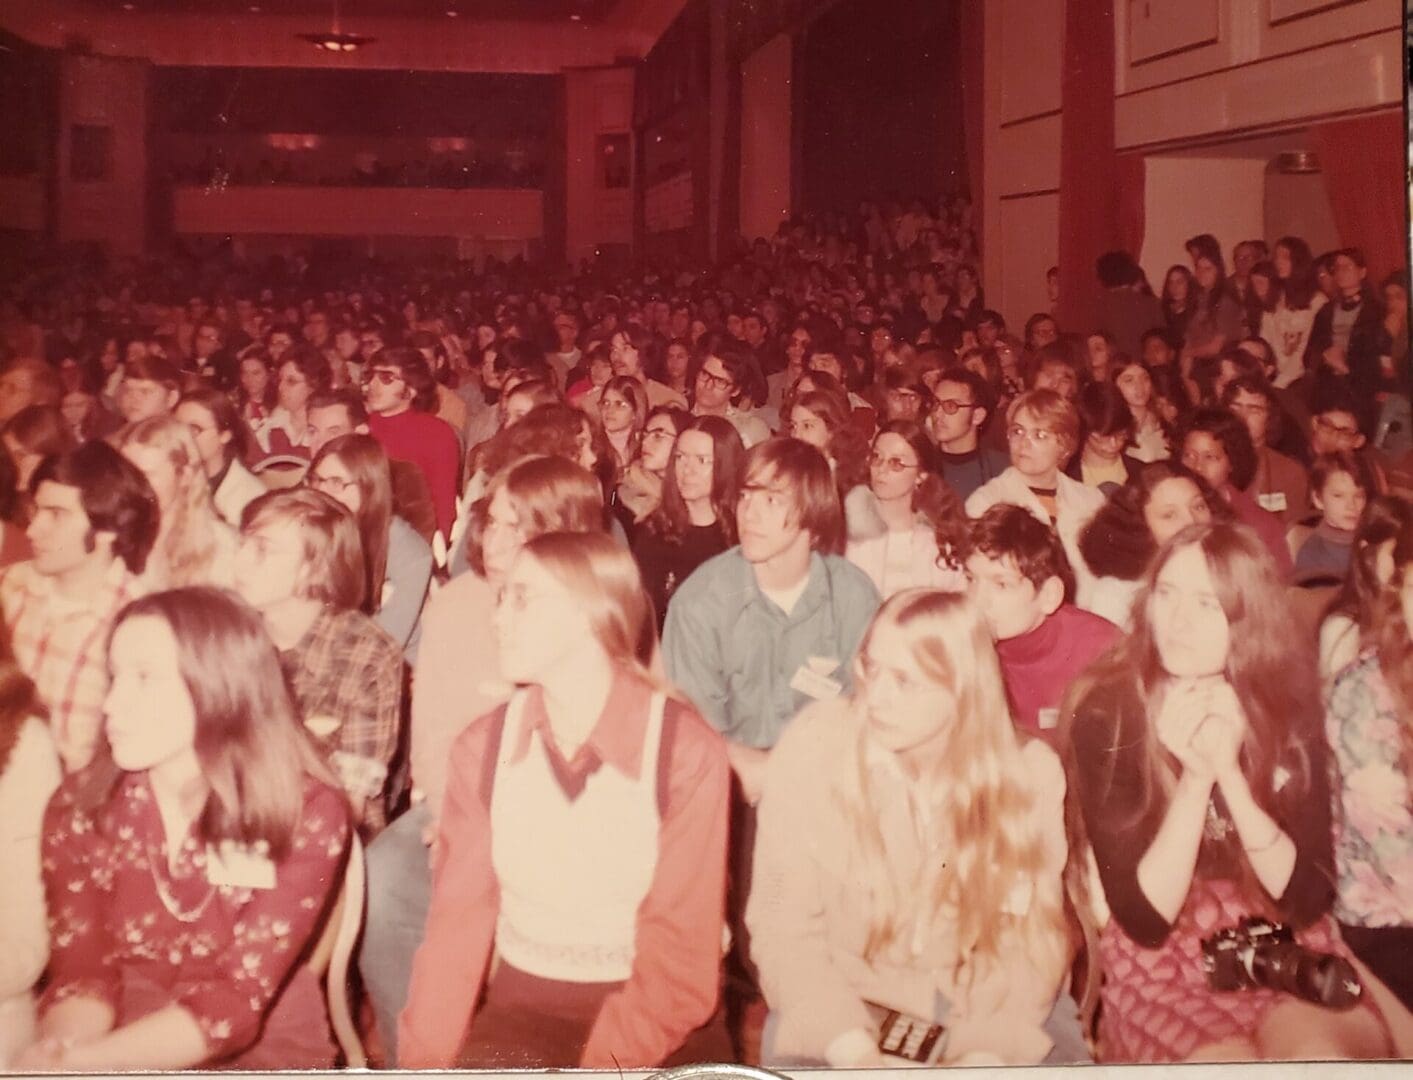 1973 NY Star Trek Convention Audience